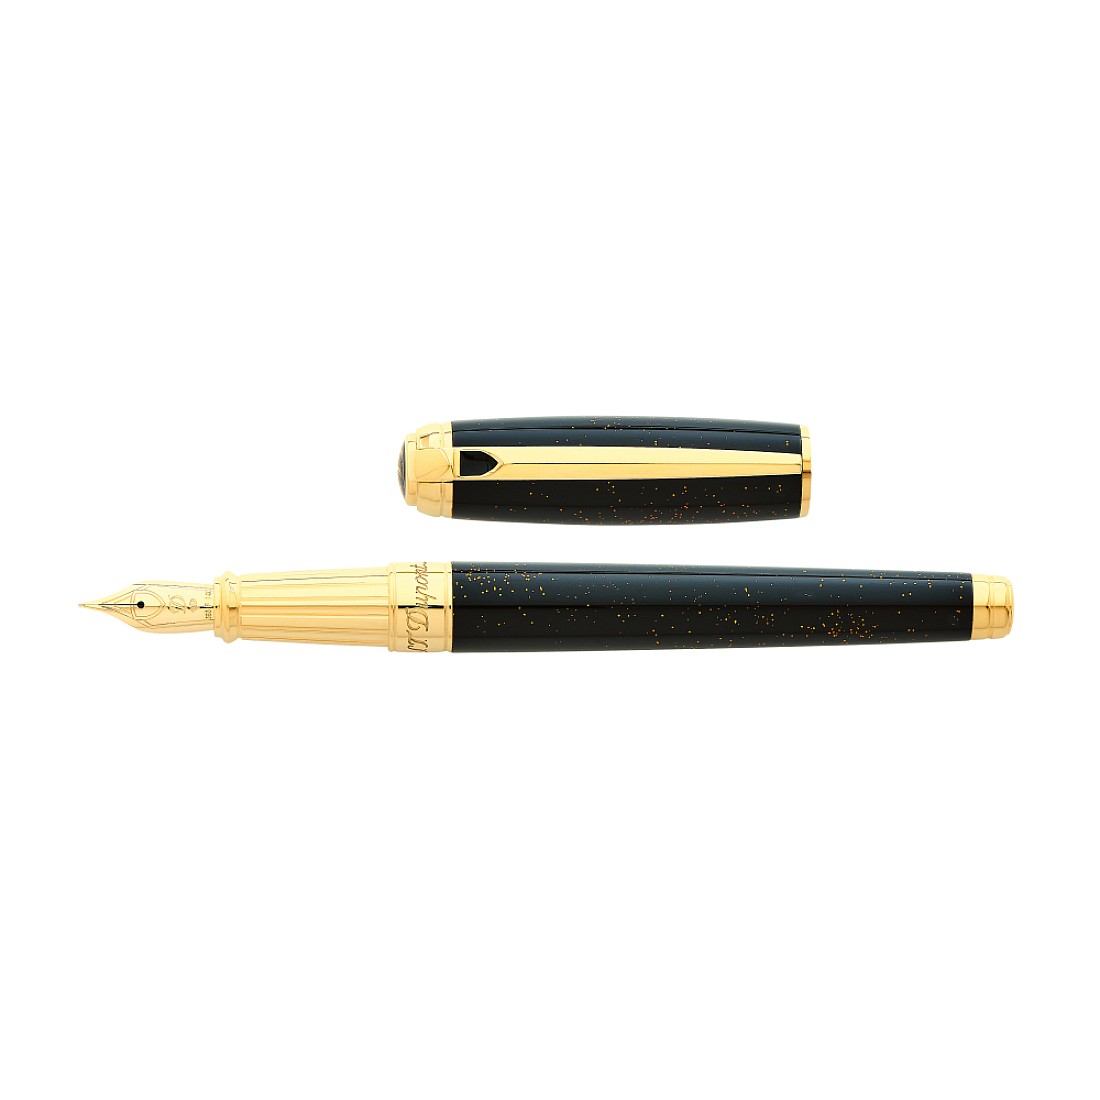 Estúpido tono máscara S.T. Dupont Line D Gold Dust Fountain pen - Vulpen / Fountain pen |  Appelboom.com